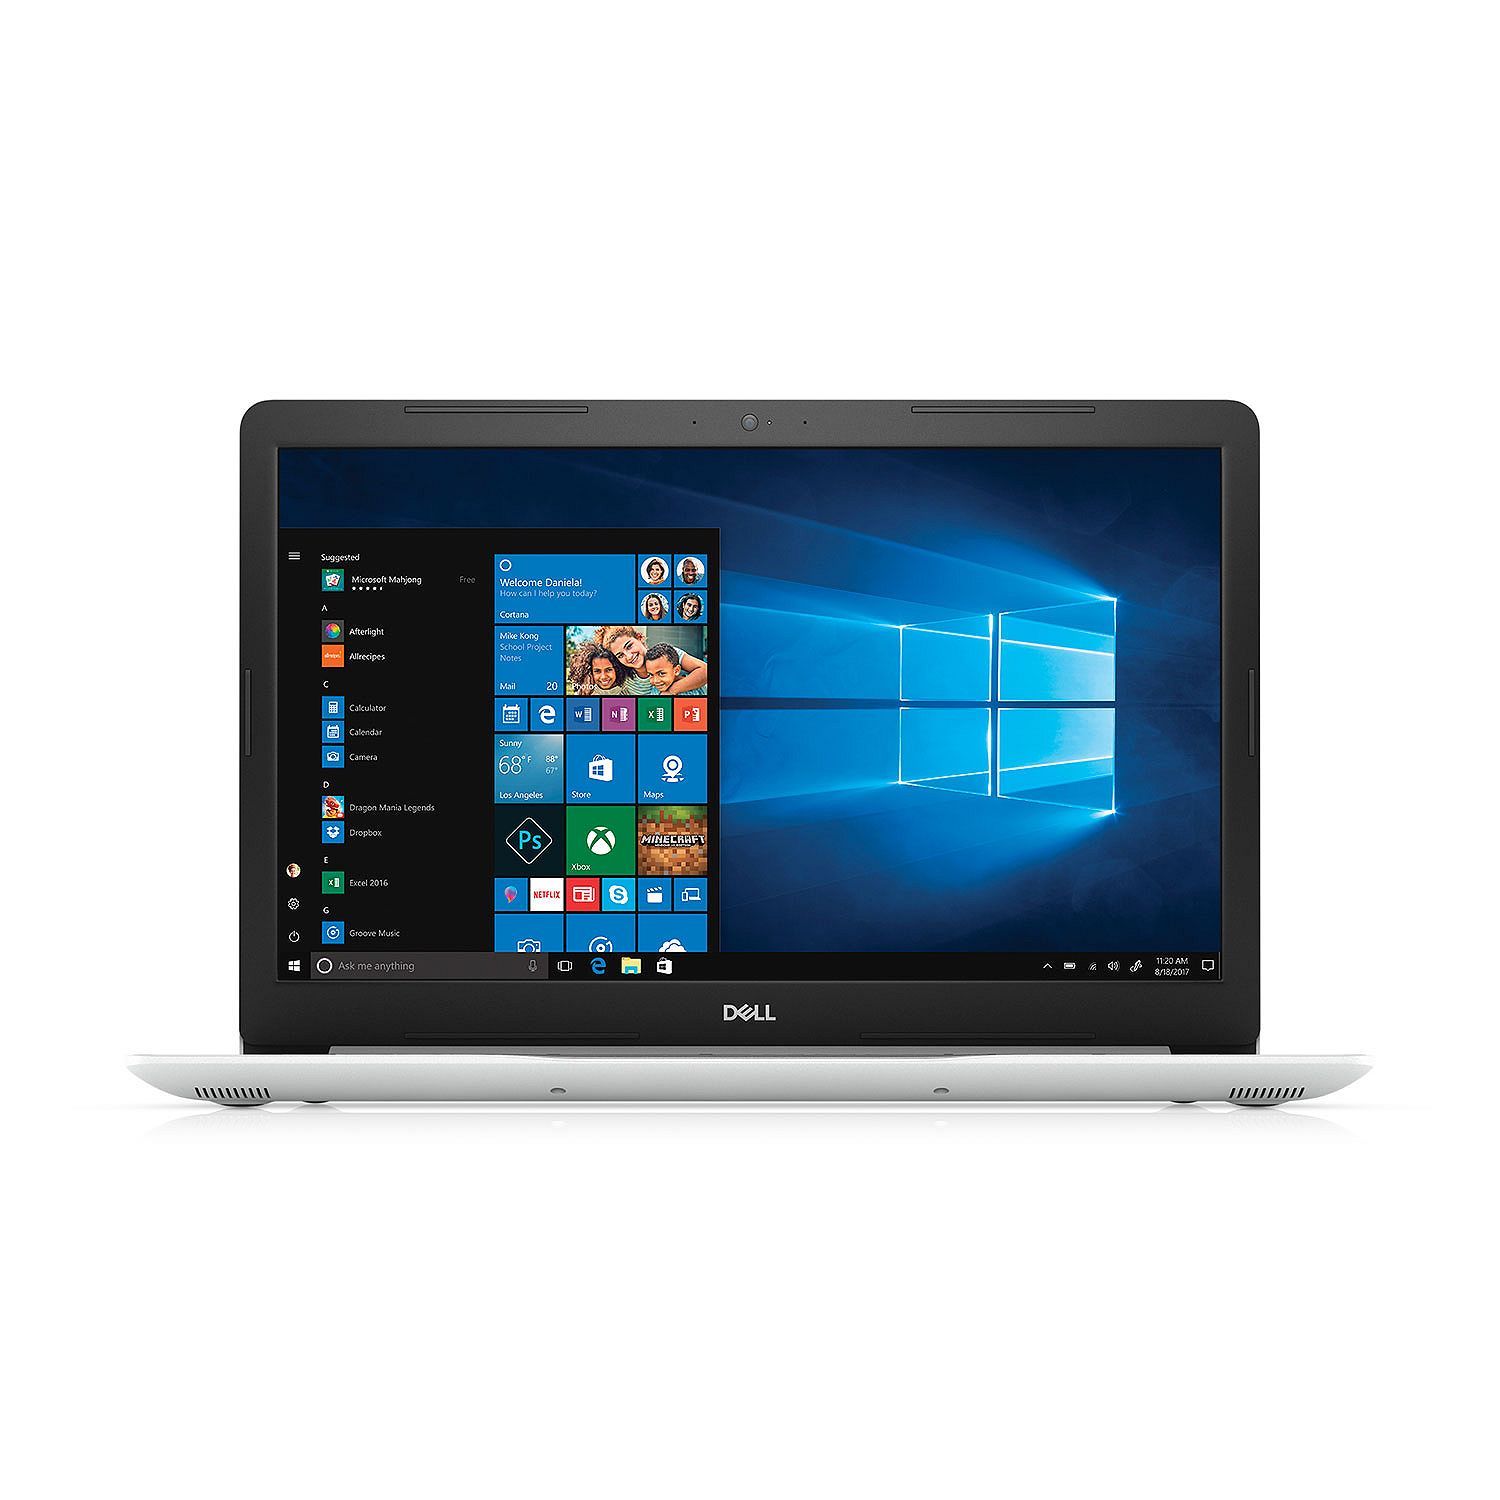 Dell Inspiron i5570-7739WHT-PUS 15.6″ Laptop, 8th Gen Core i7, 8GB RAM, 2TB HDD